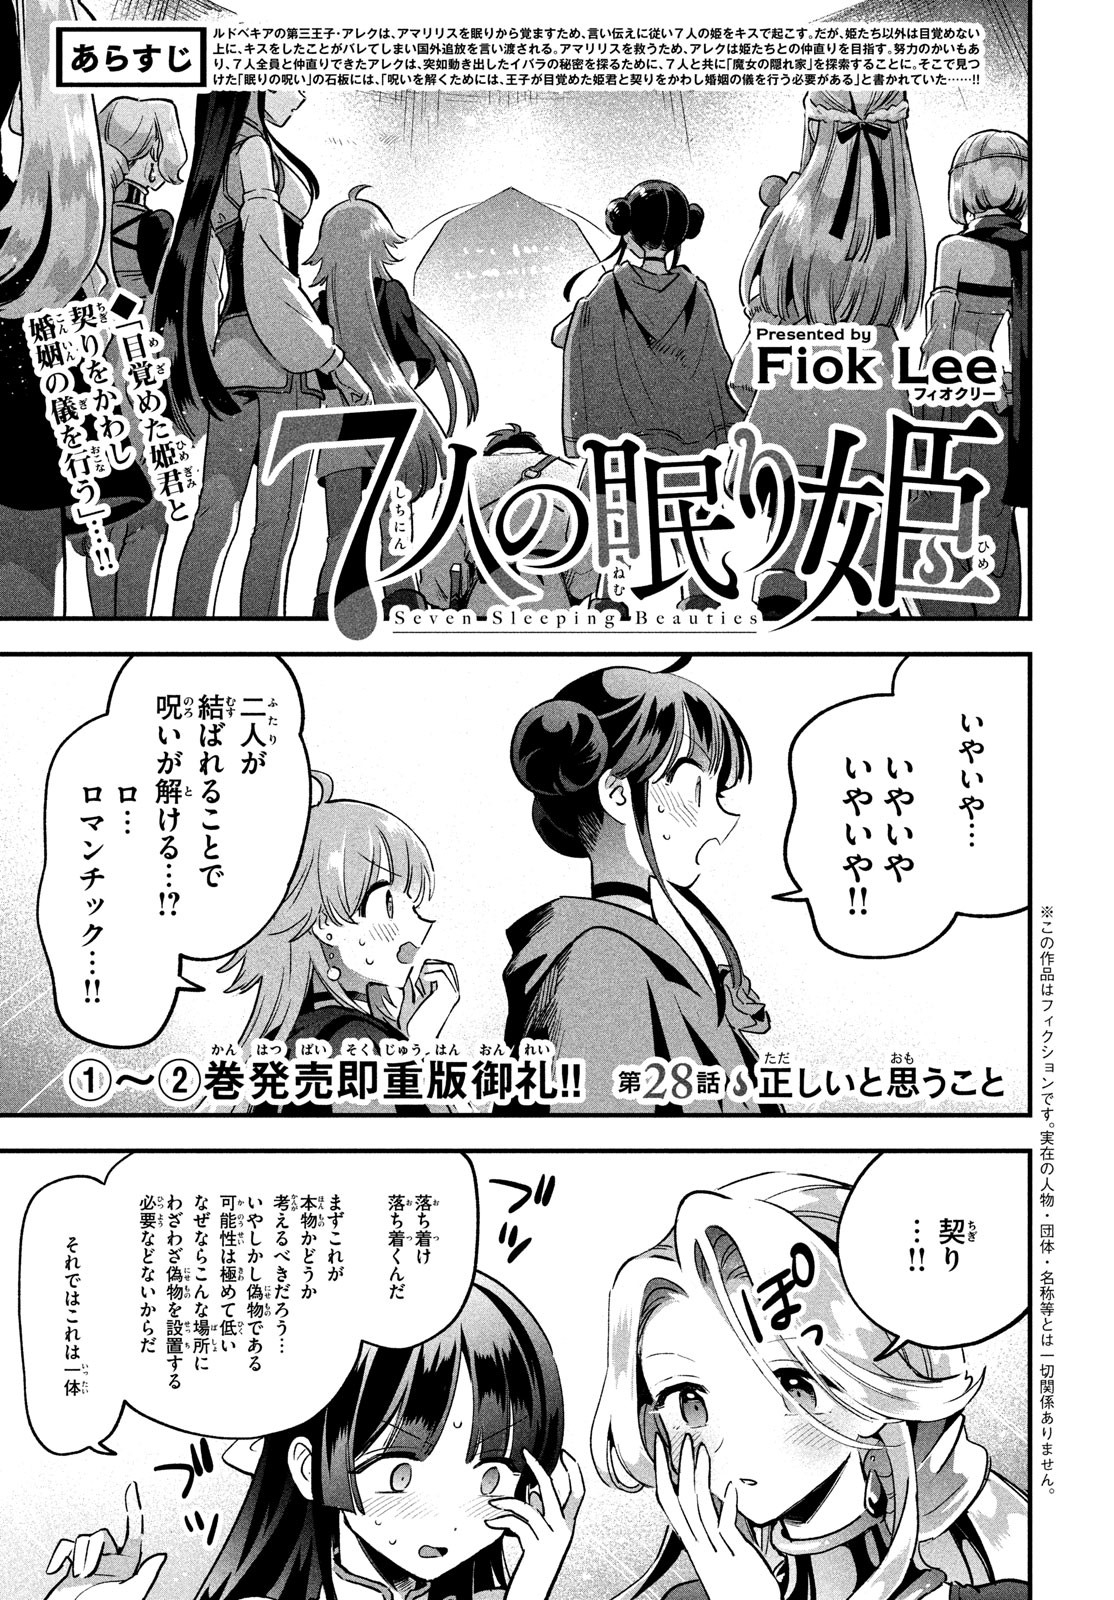 7-nin no Nemuri Hime - Chapter 28 - Page 2